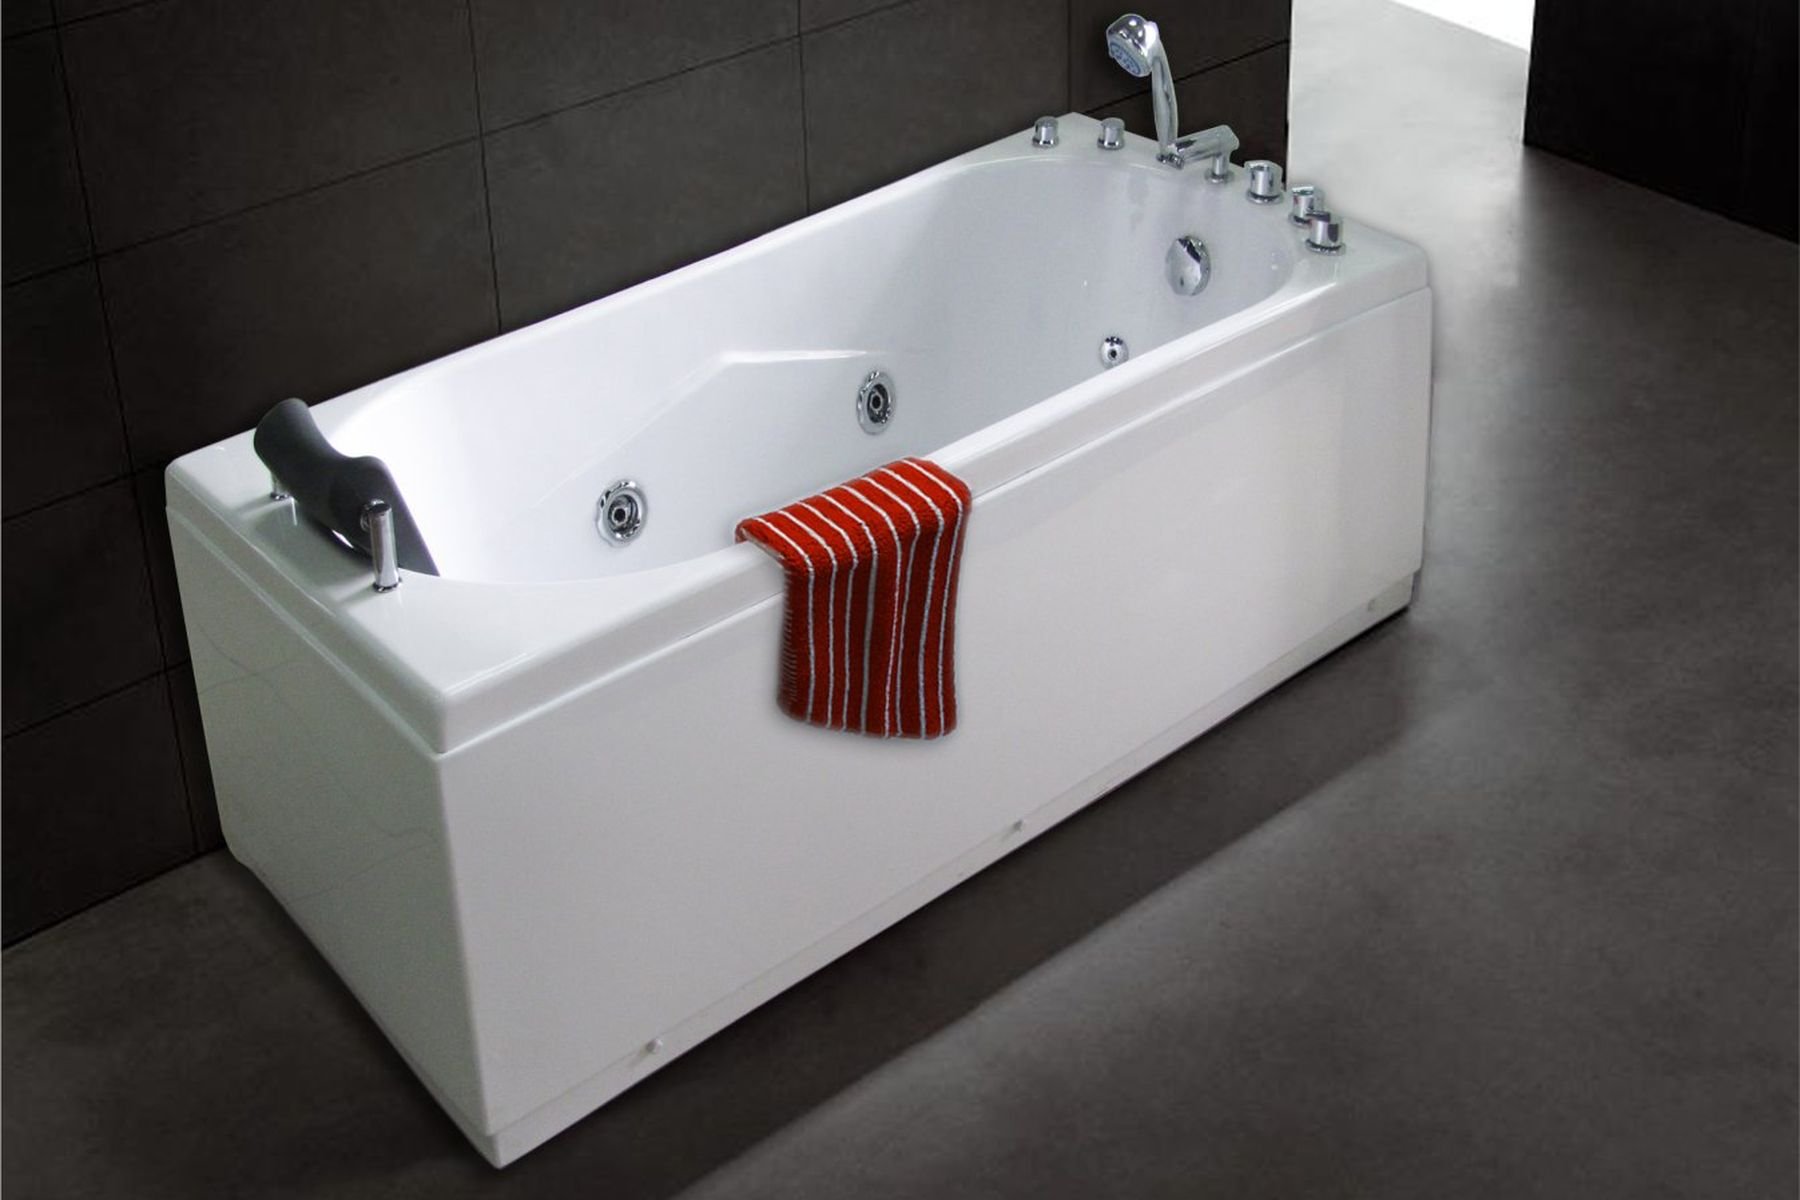 Акриловая ванна Royal Bath Tudor Senosan 150x70 RB407700